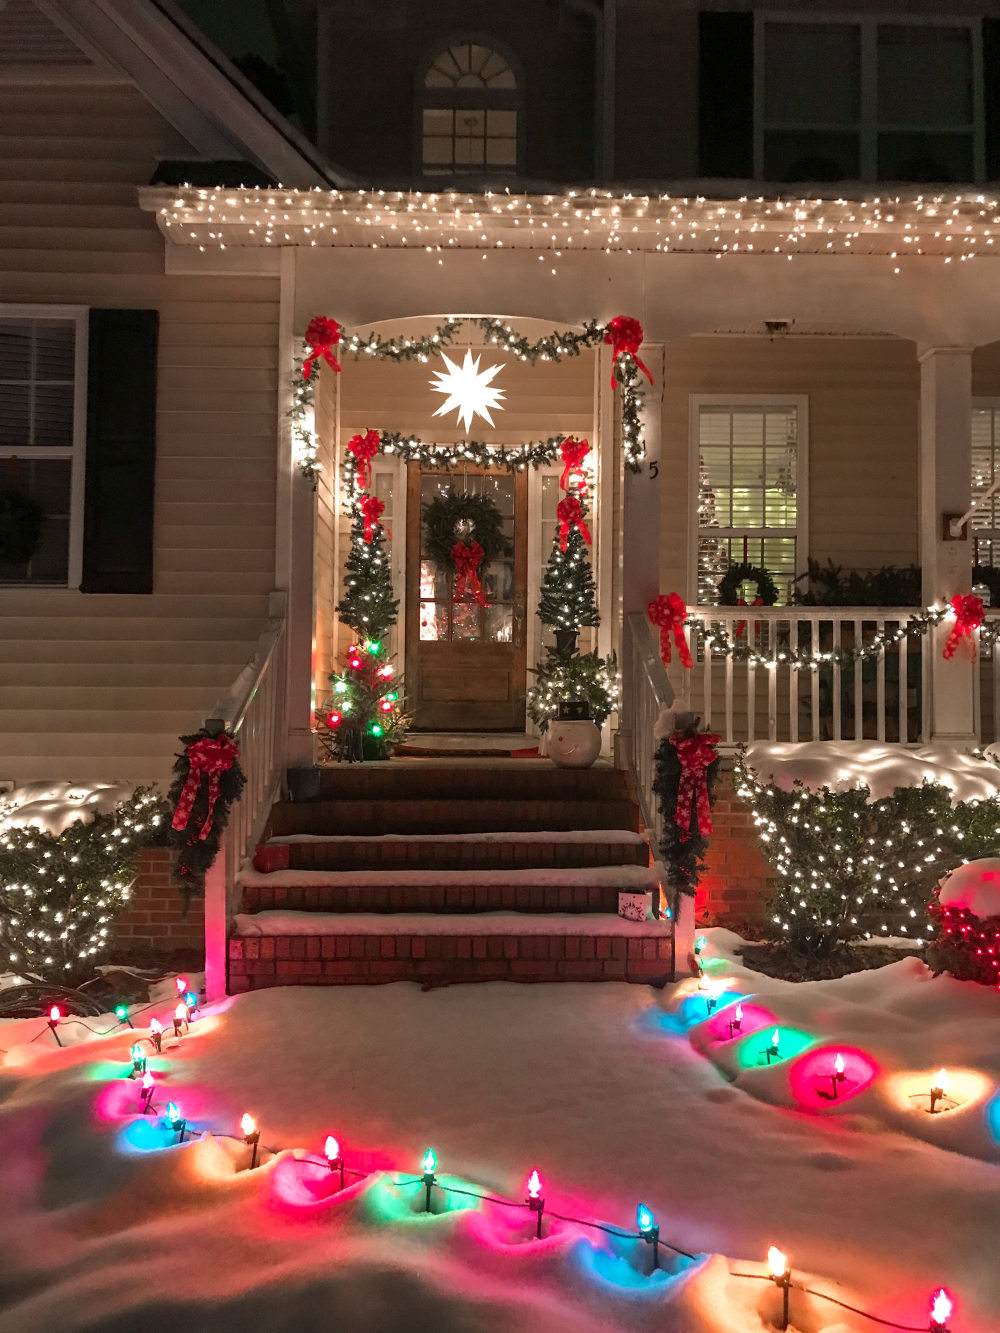 15 Fun & Festive Christmas Porch Ideas - Modern Glam - Holidays - 15 Fun & Festive Christmas Porch Ideas - Modern Glam - Holidays -   19 christmas decor outdoor lights ideas